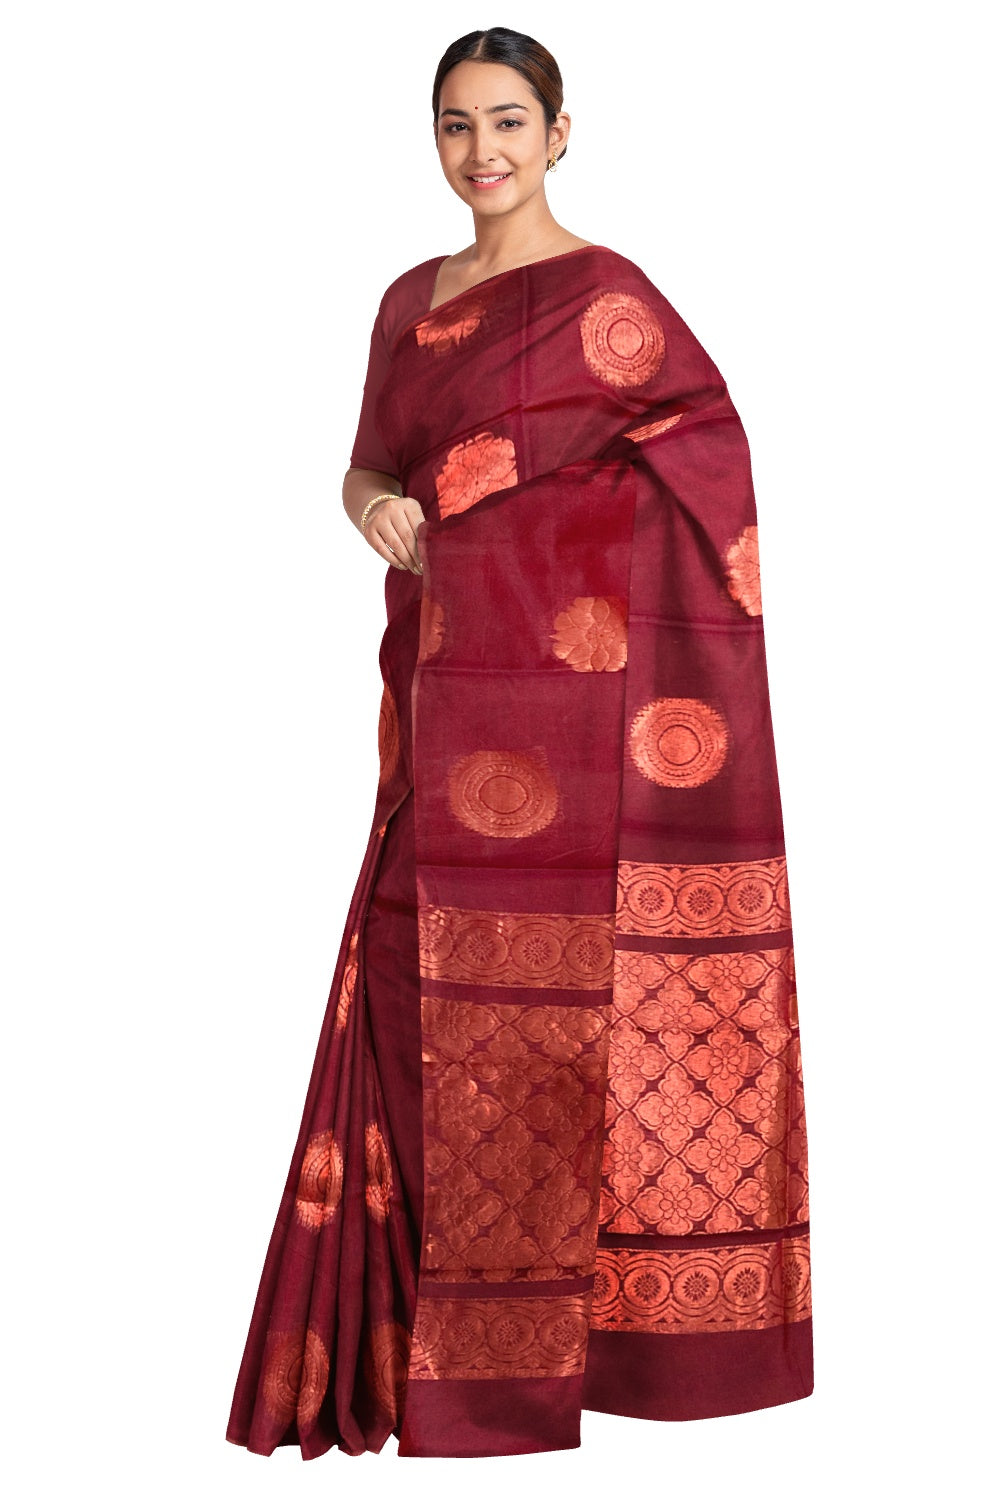 Southloom Cotton Silk Borderless Maroon Designer Saree with Zari Motifs